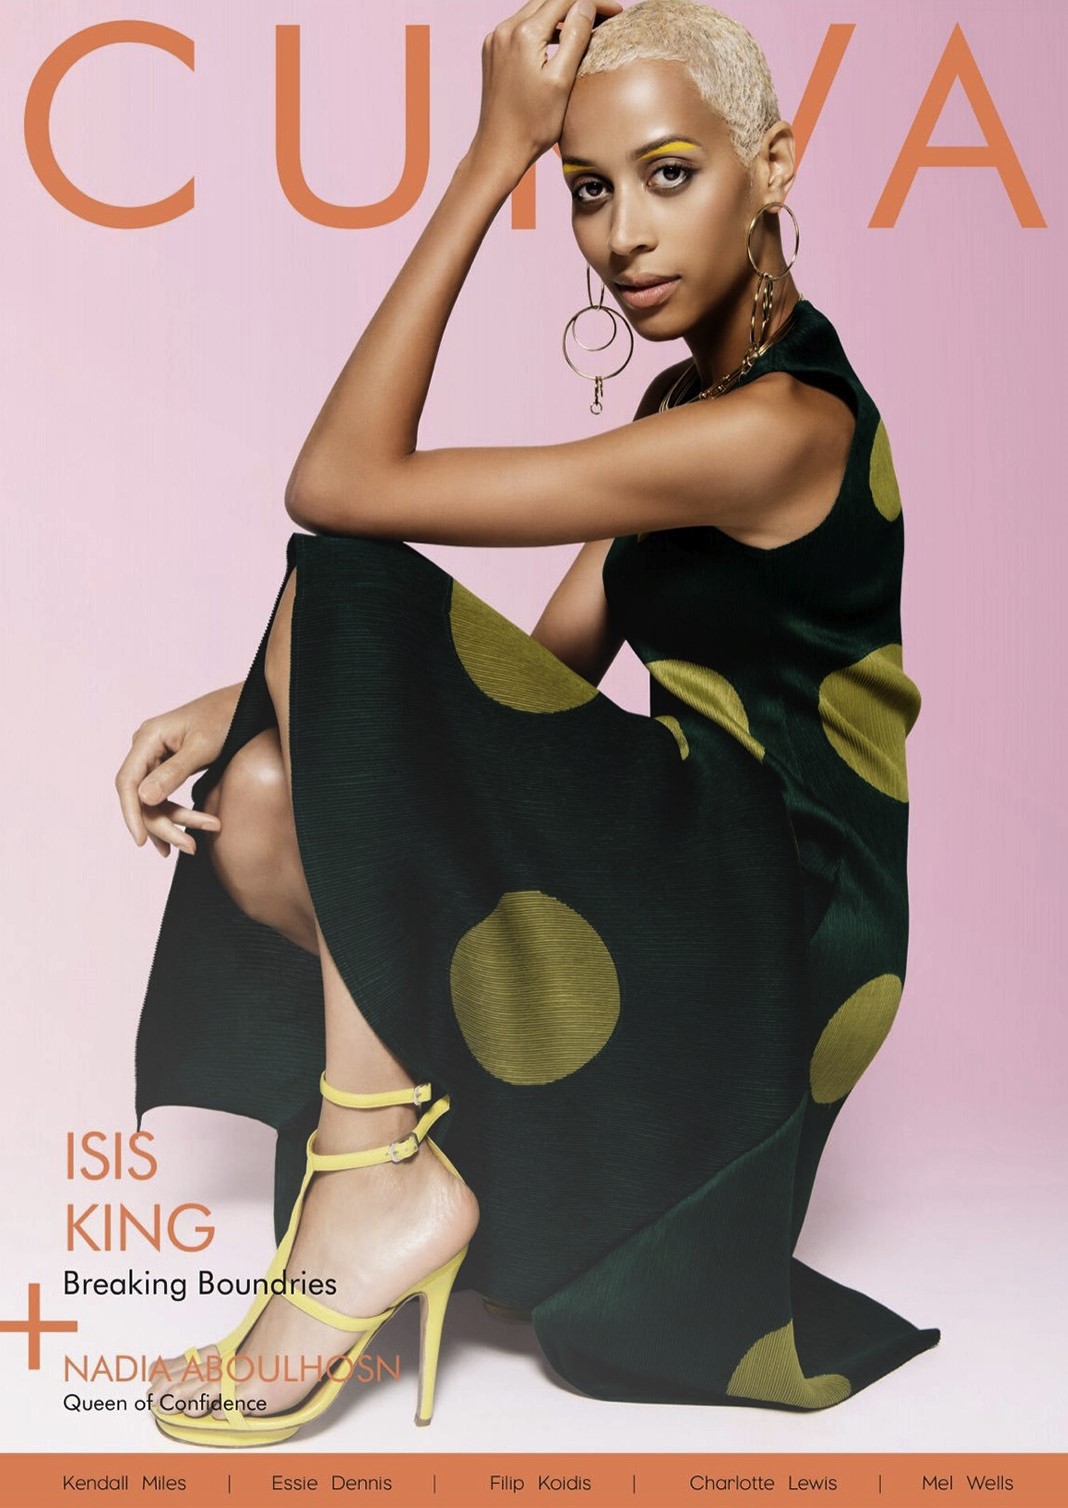 Айсис Кинг на обложке журнала Curva